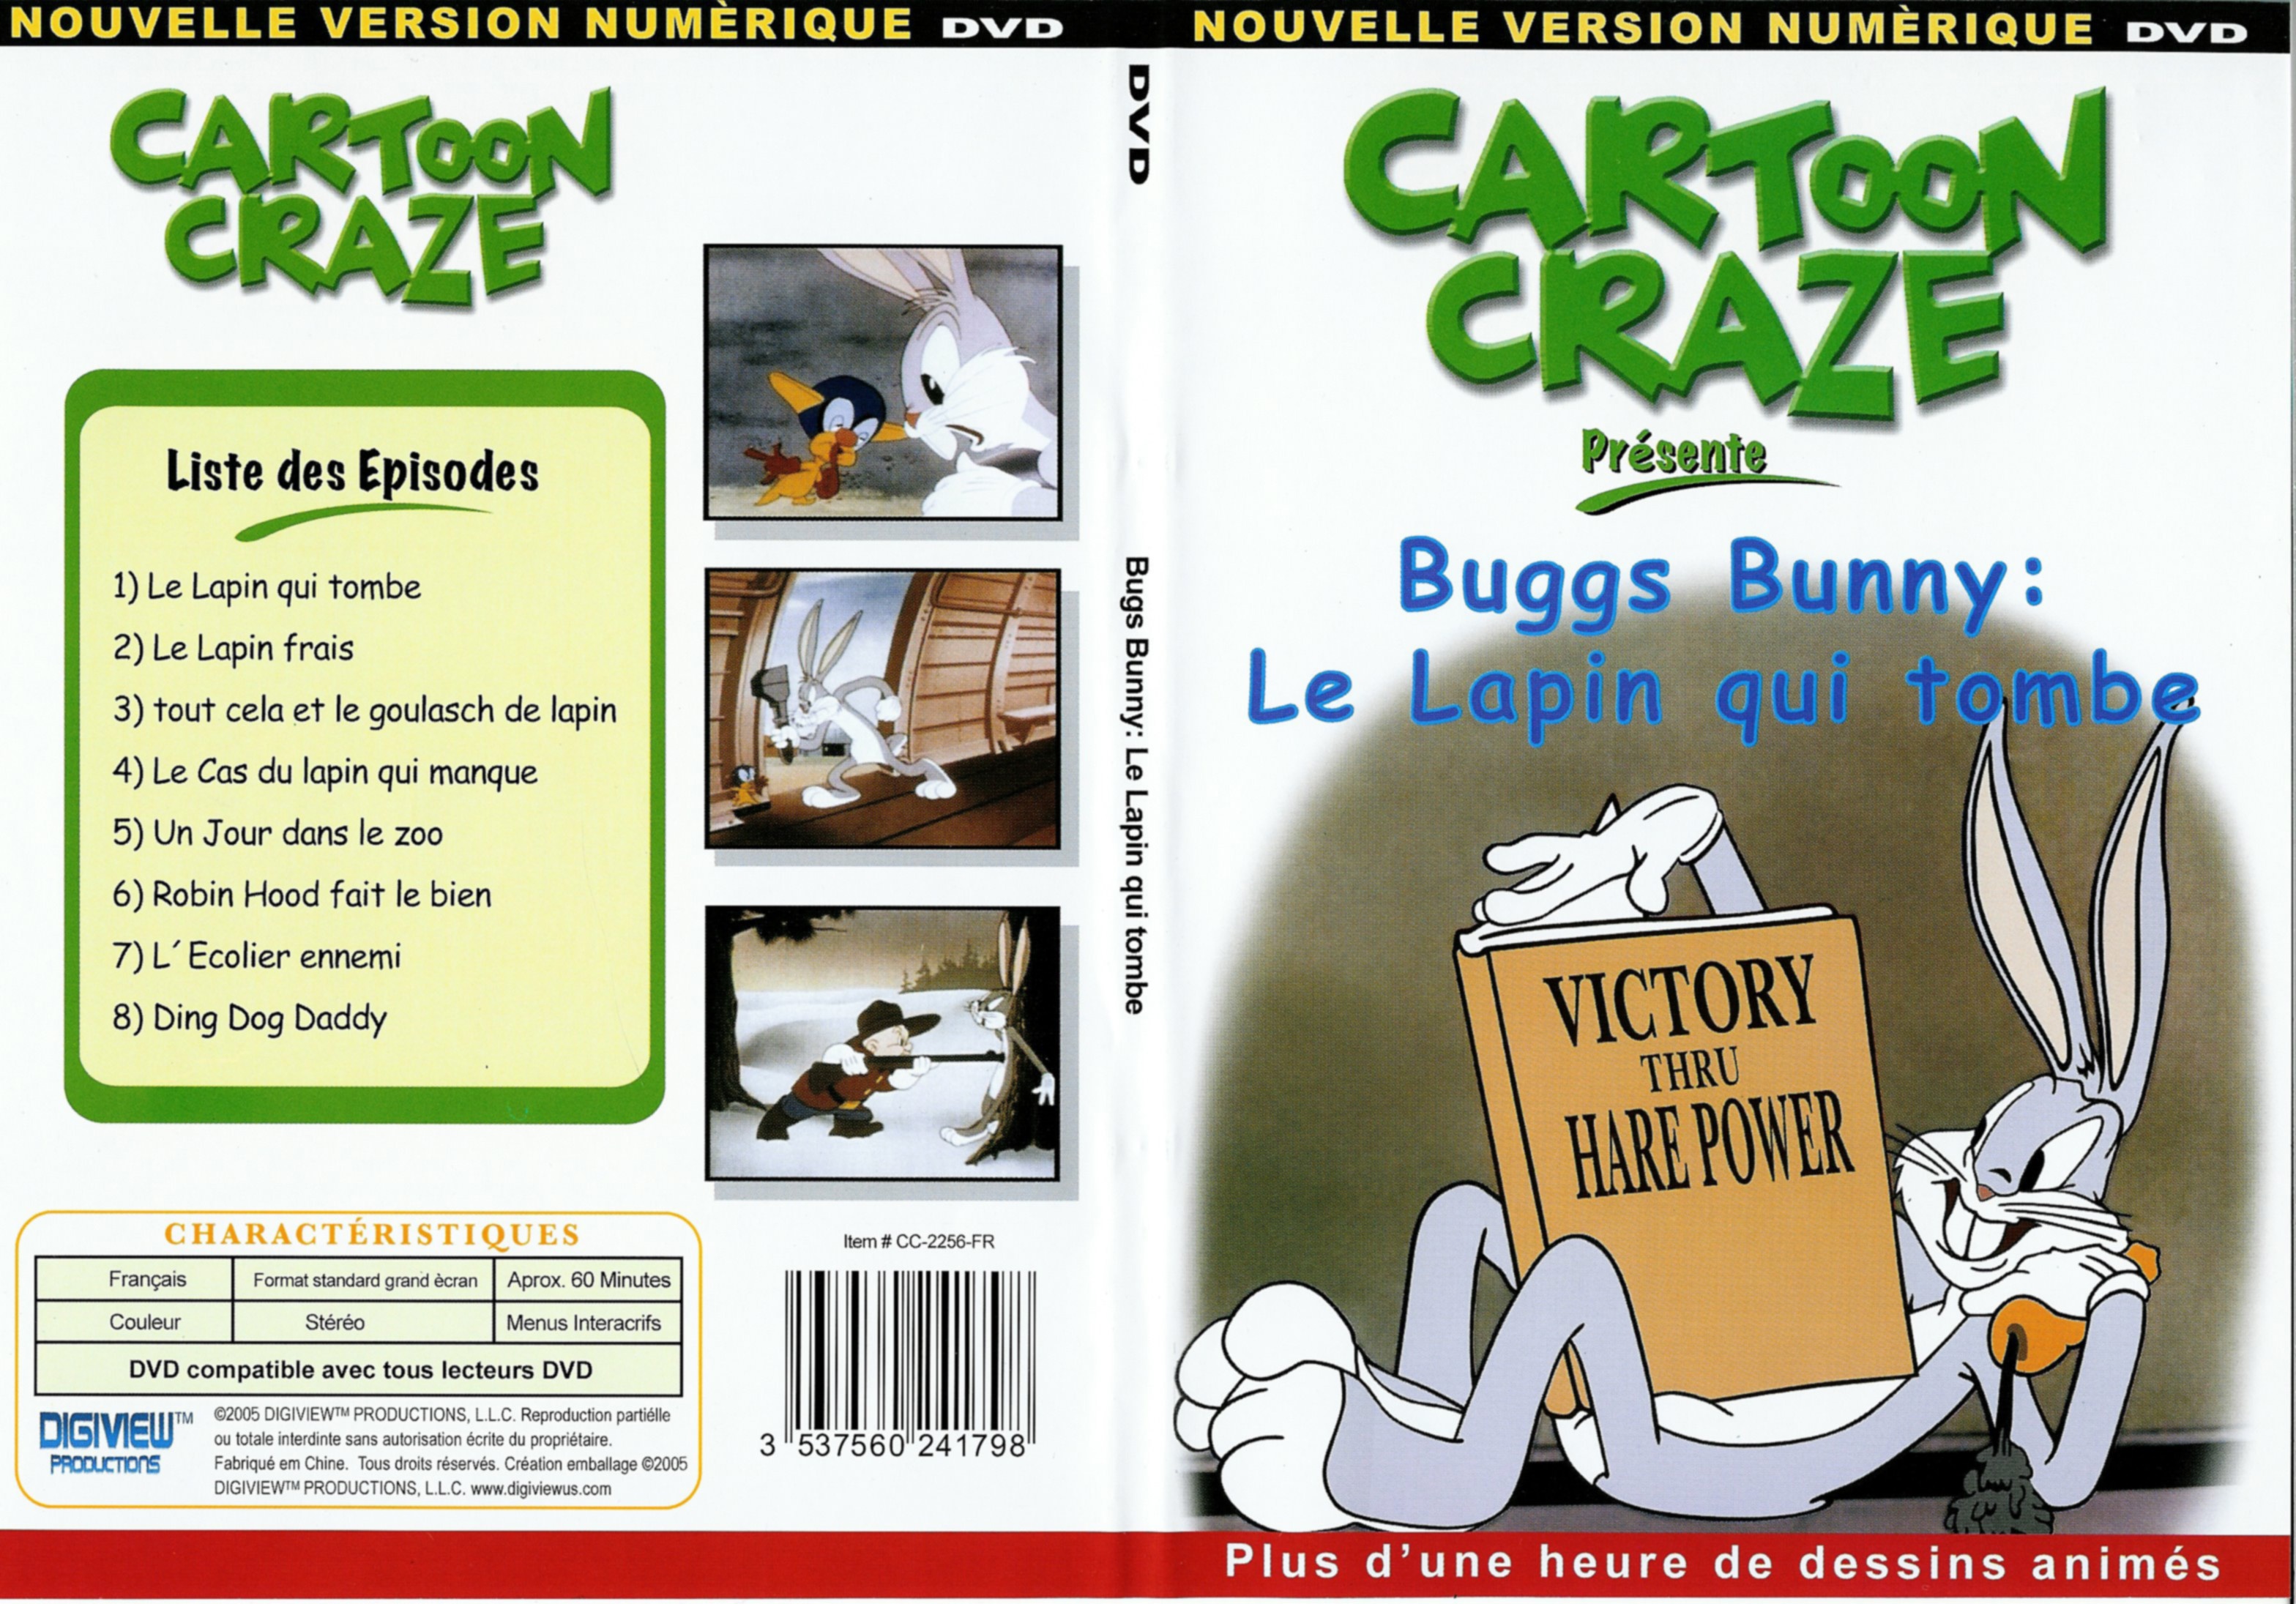 Jaquette DVD Cartoon Craze - Buggs Bunny - le lapin qui tombe